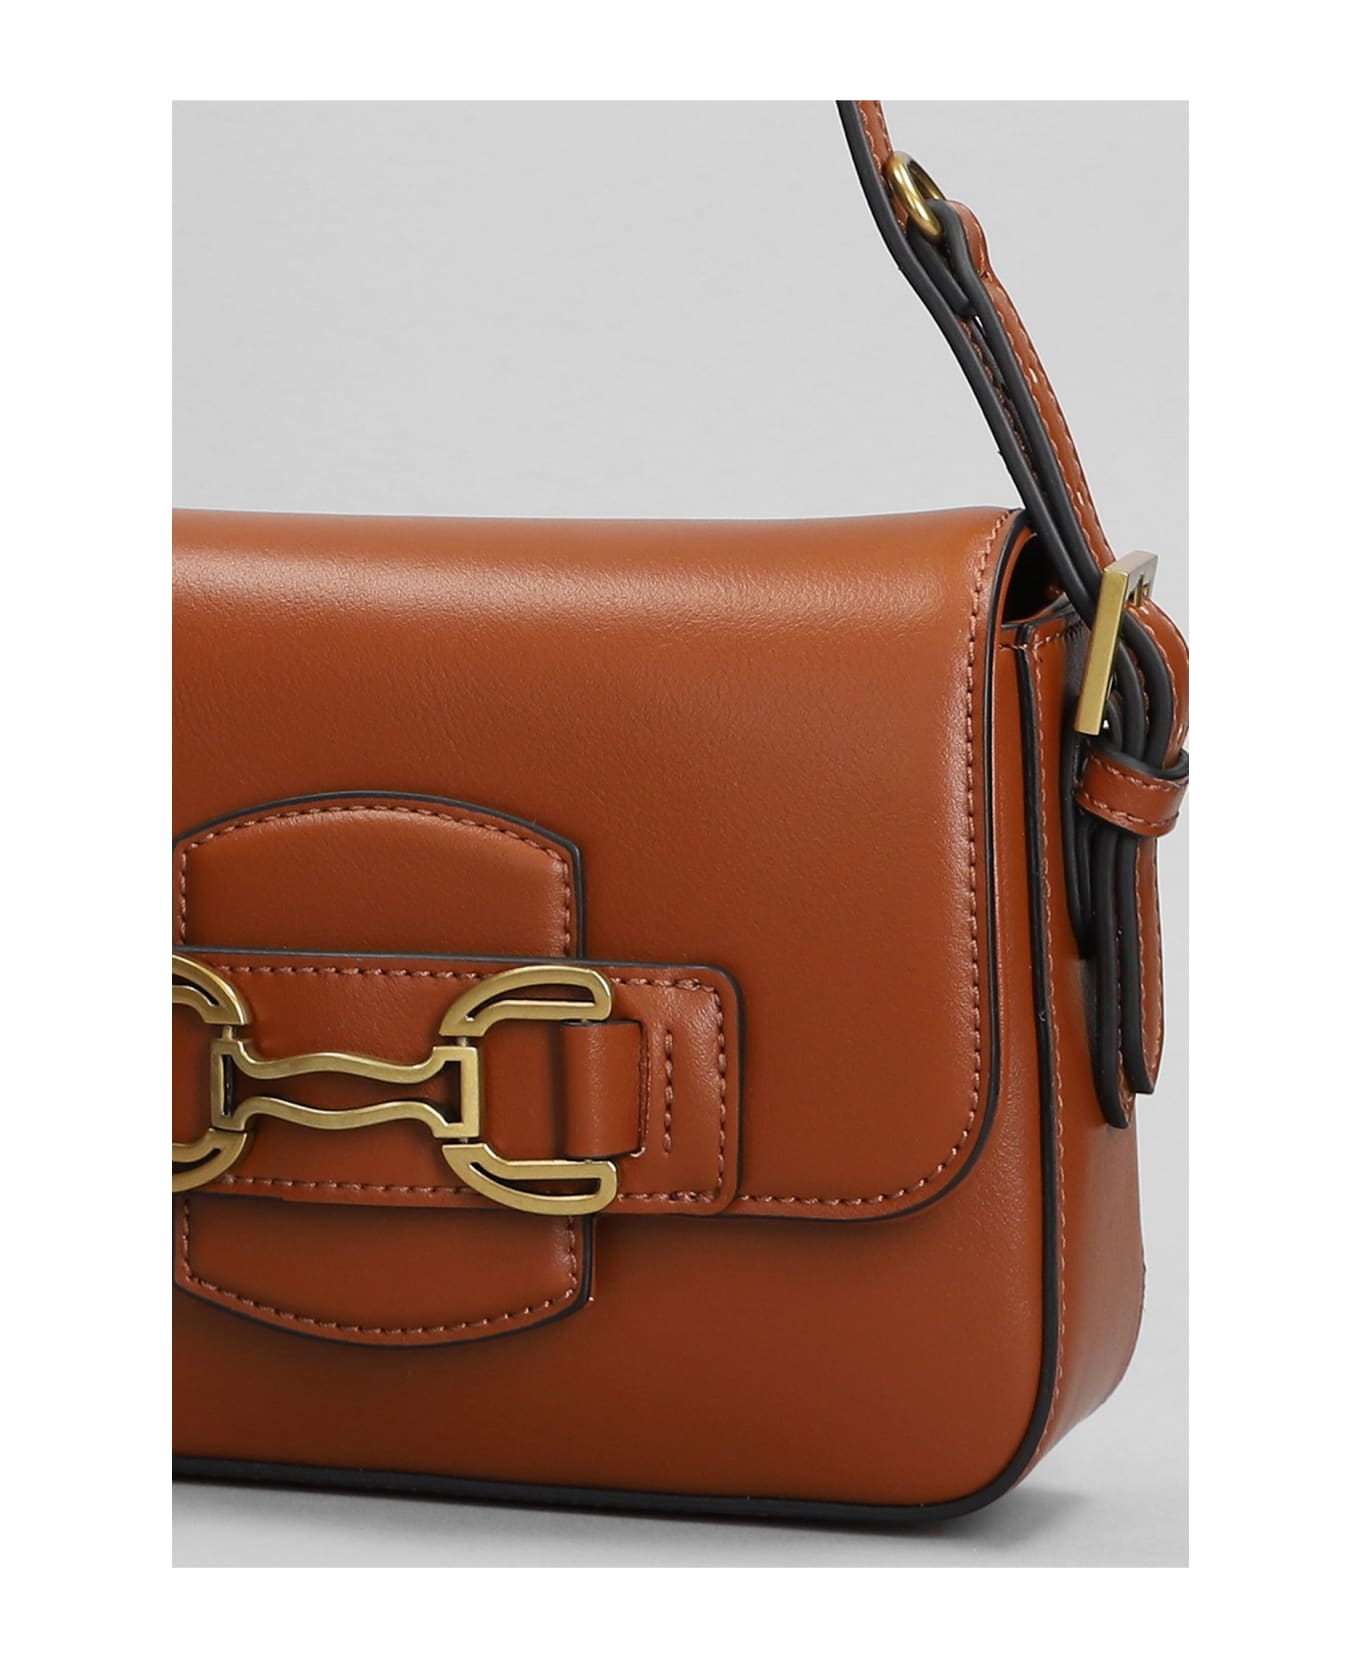 Bibi Lou Shoulder Bag In Leather Color Leather - leather color